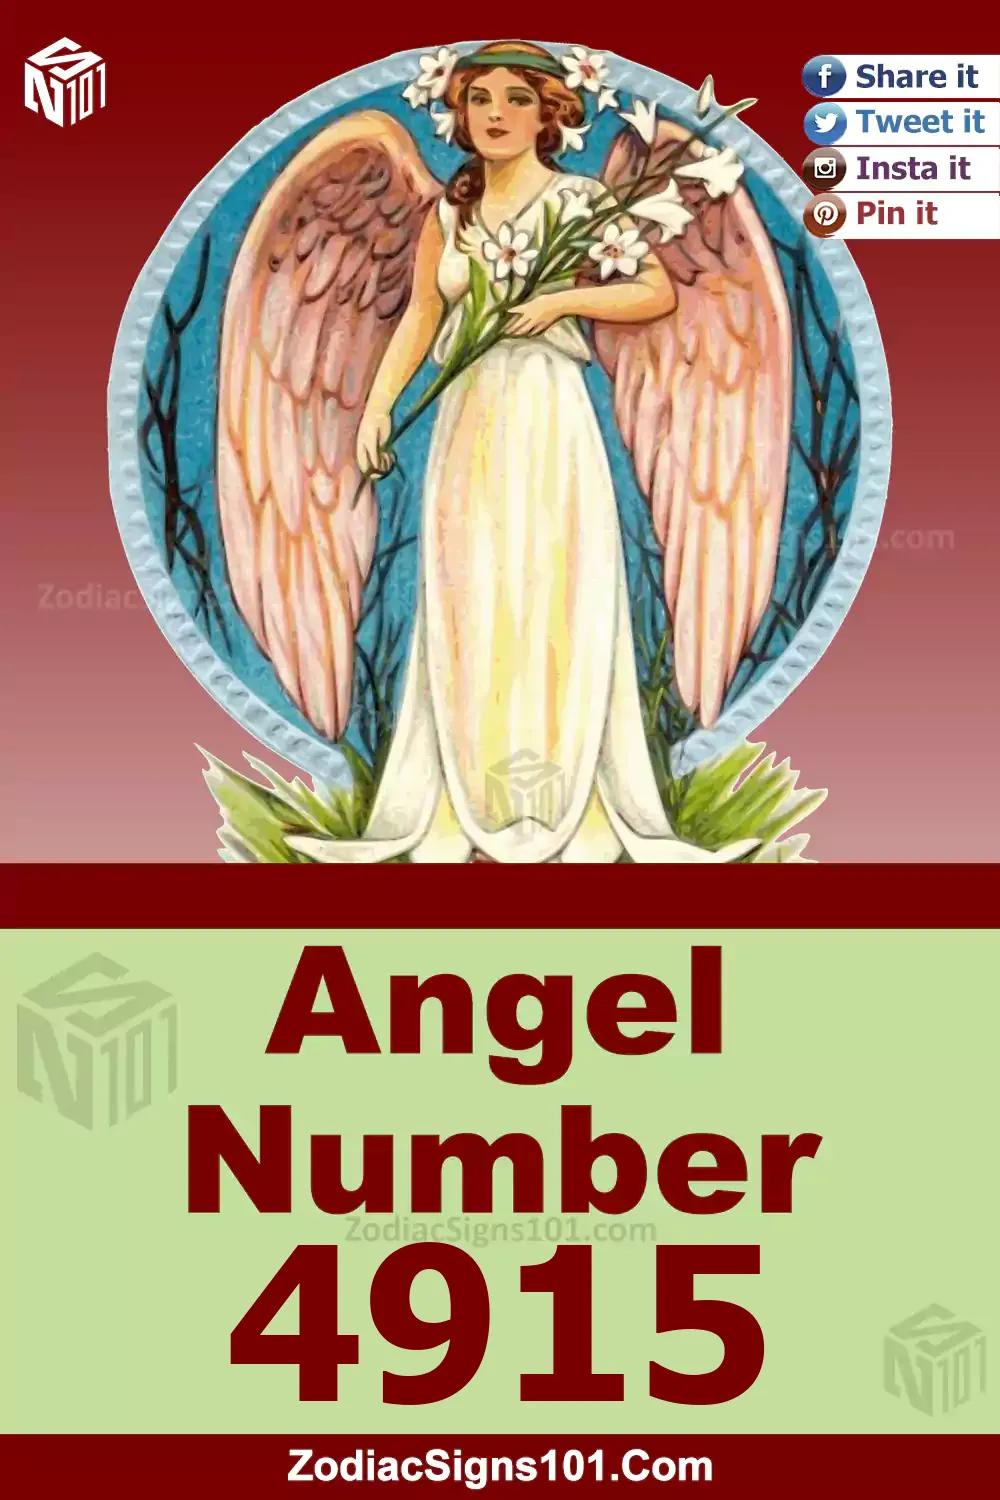 4915-Angel-Number-Meaning.jpg